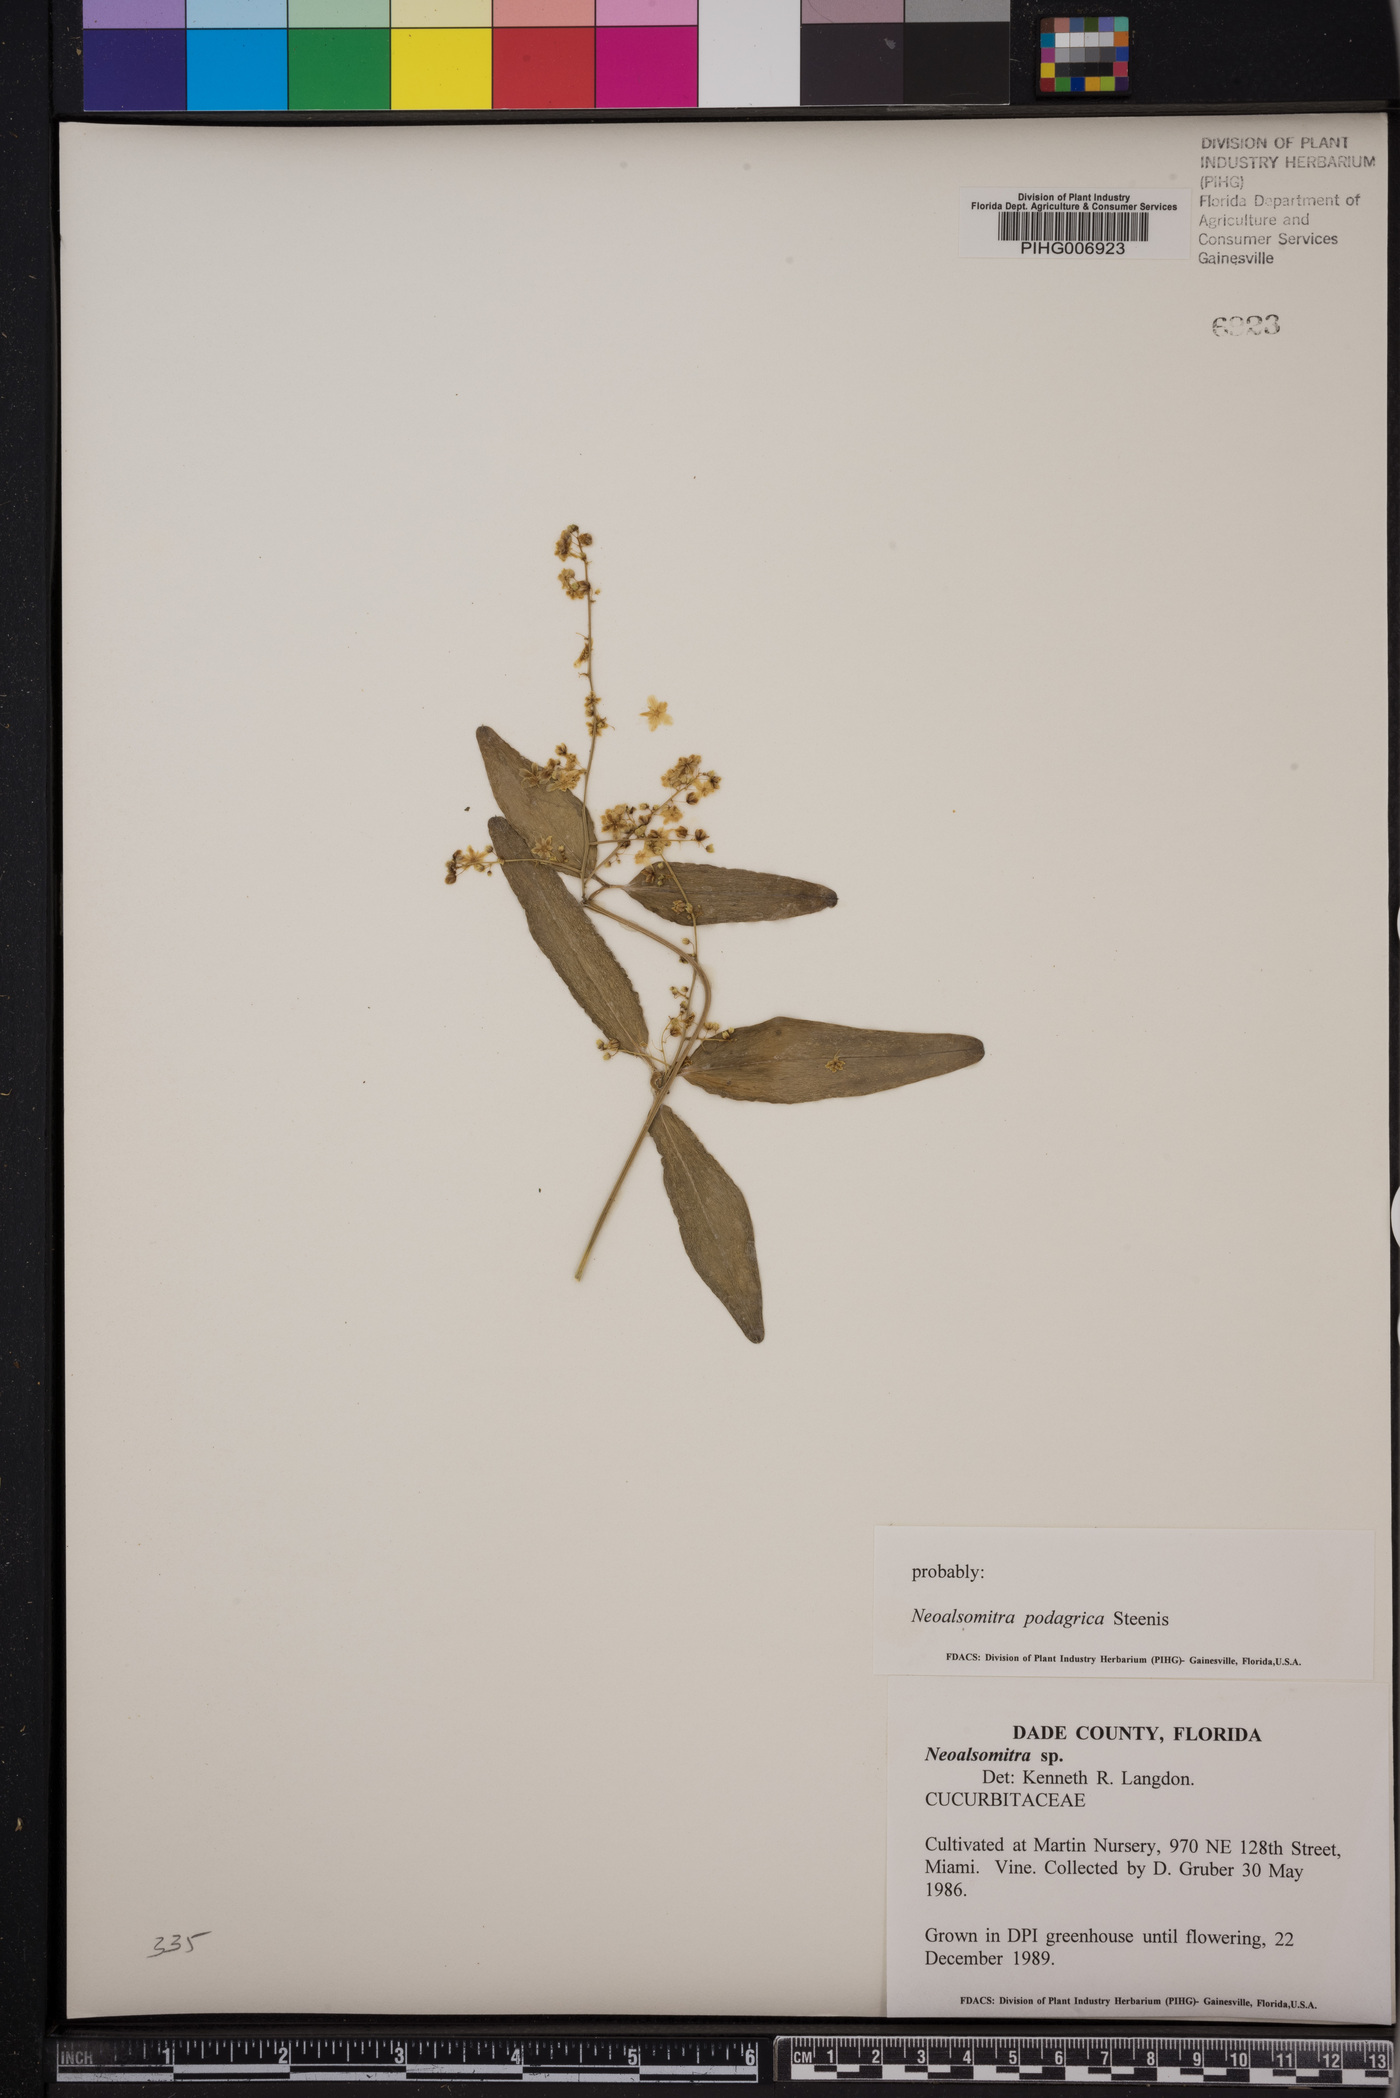 Neoalsomitra schefferiana subsp. podagrica image